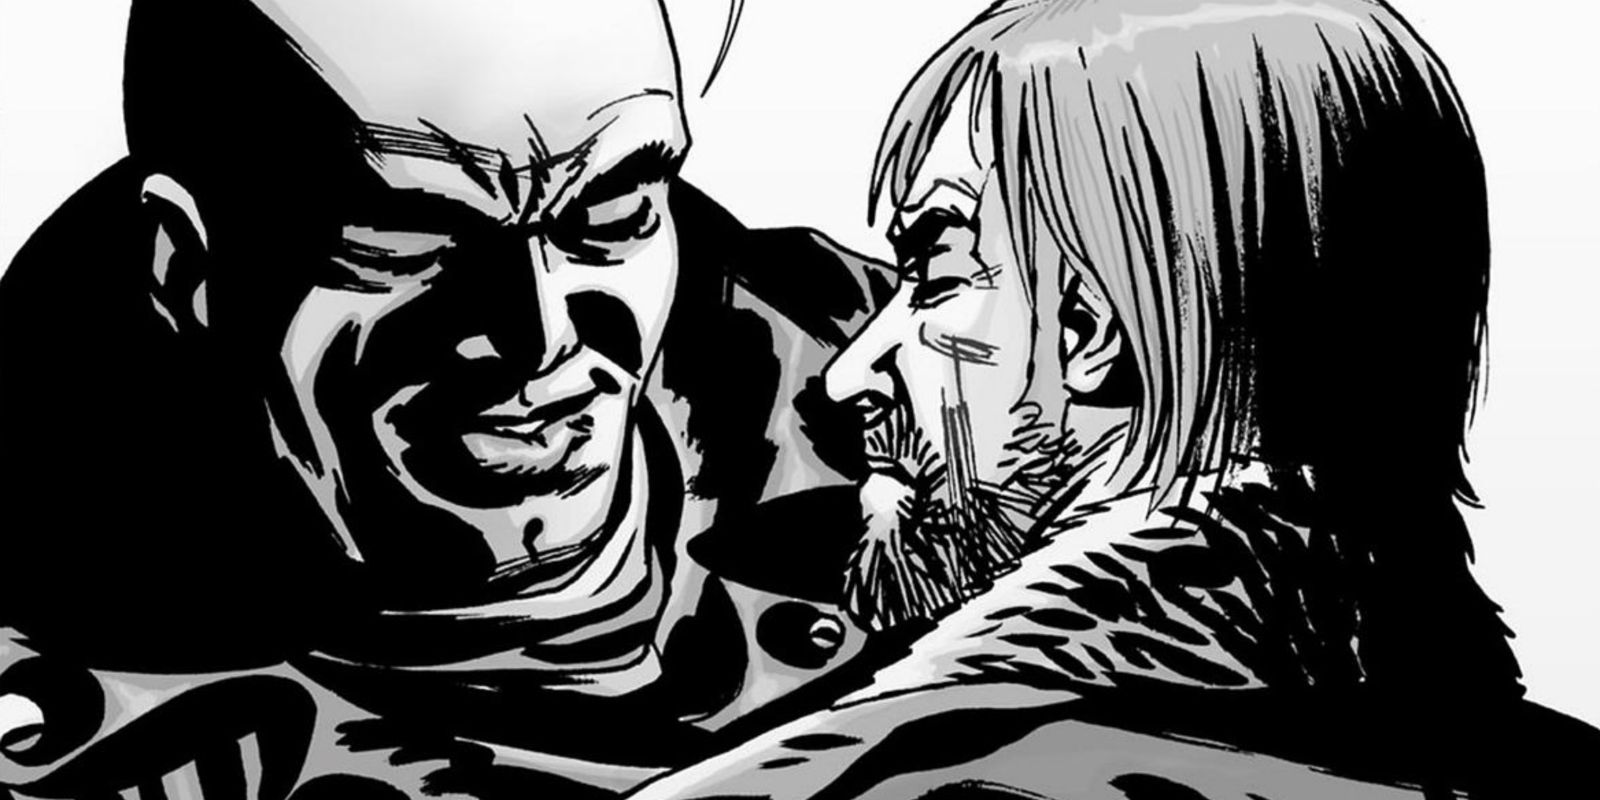 Quadrinhos de The Walking Dead - Negan e Rick